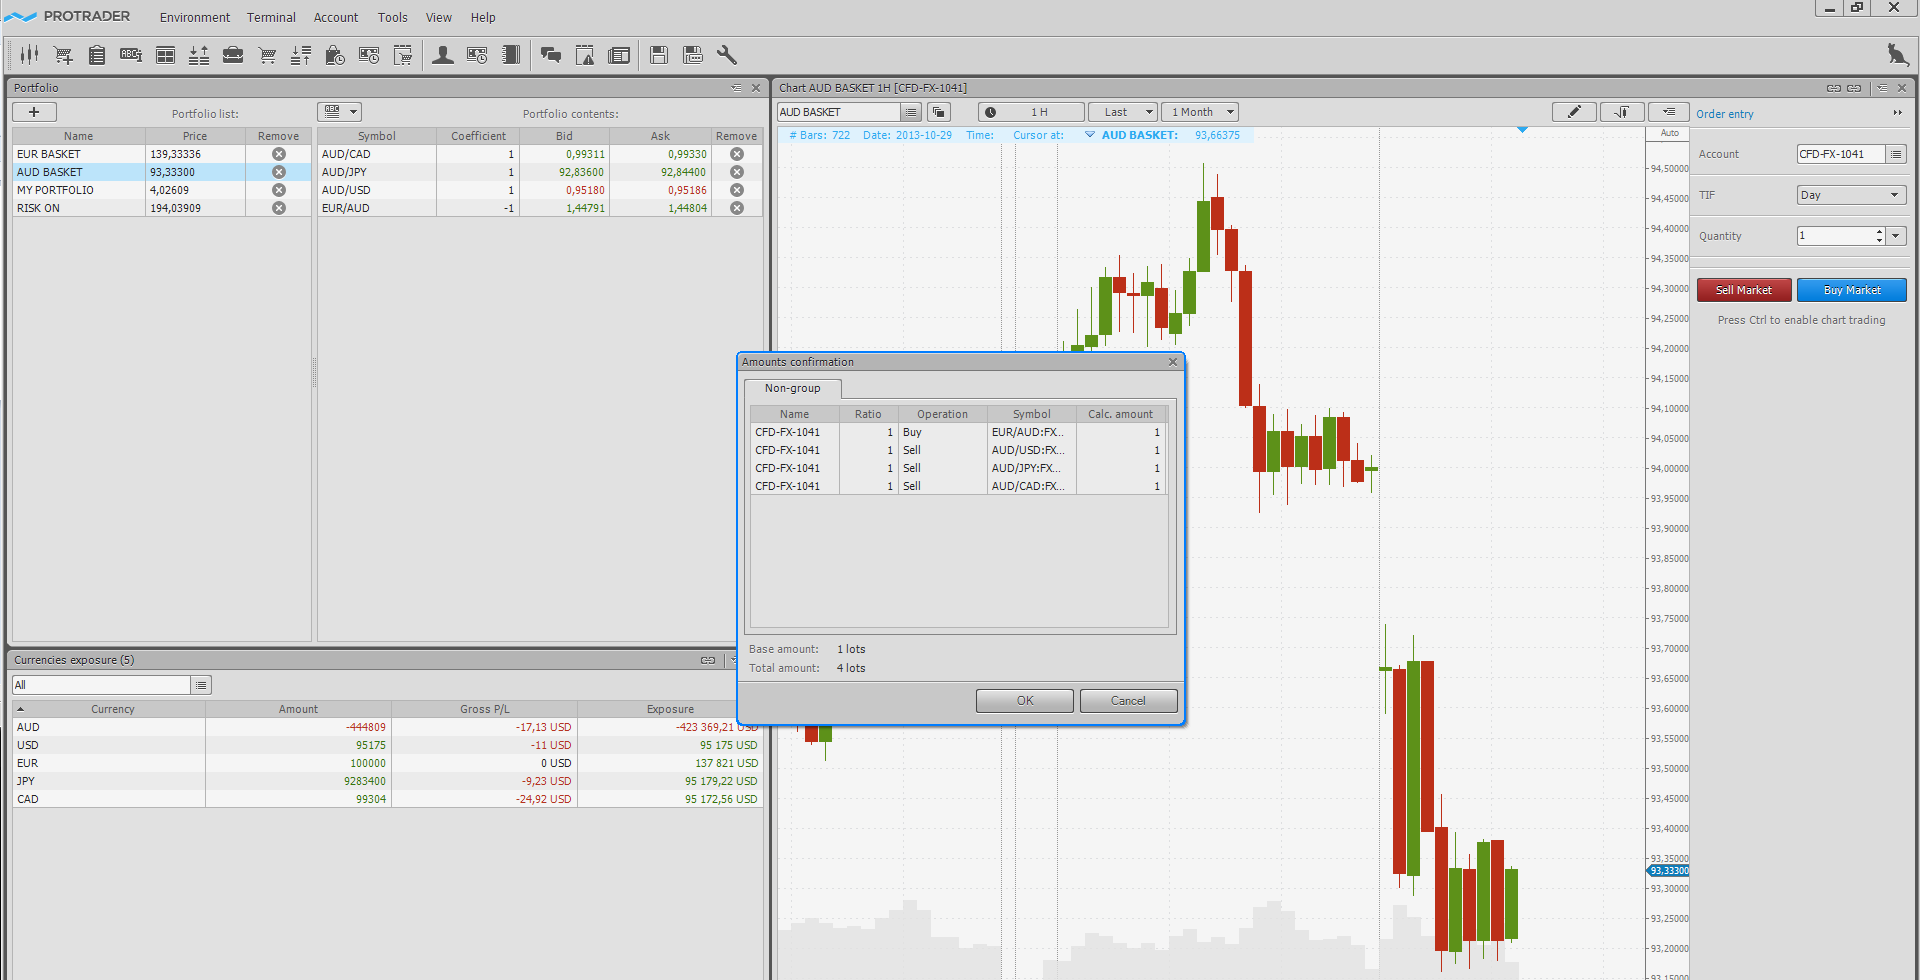 Trading portfolio - Chart AUD Basket 1H. Amounts confirmation - Protrader